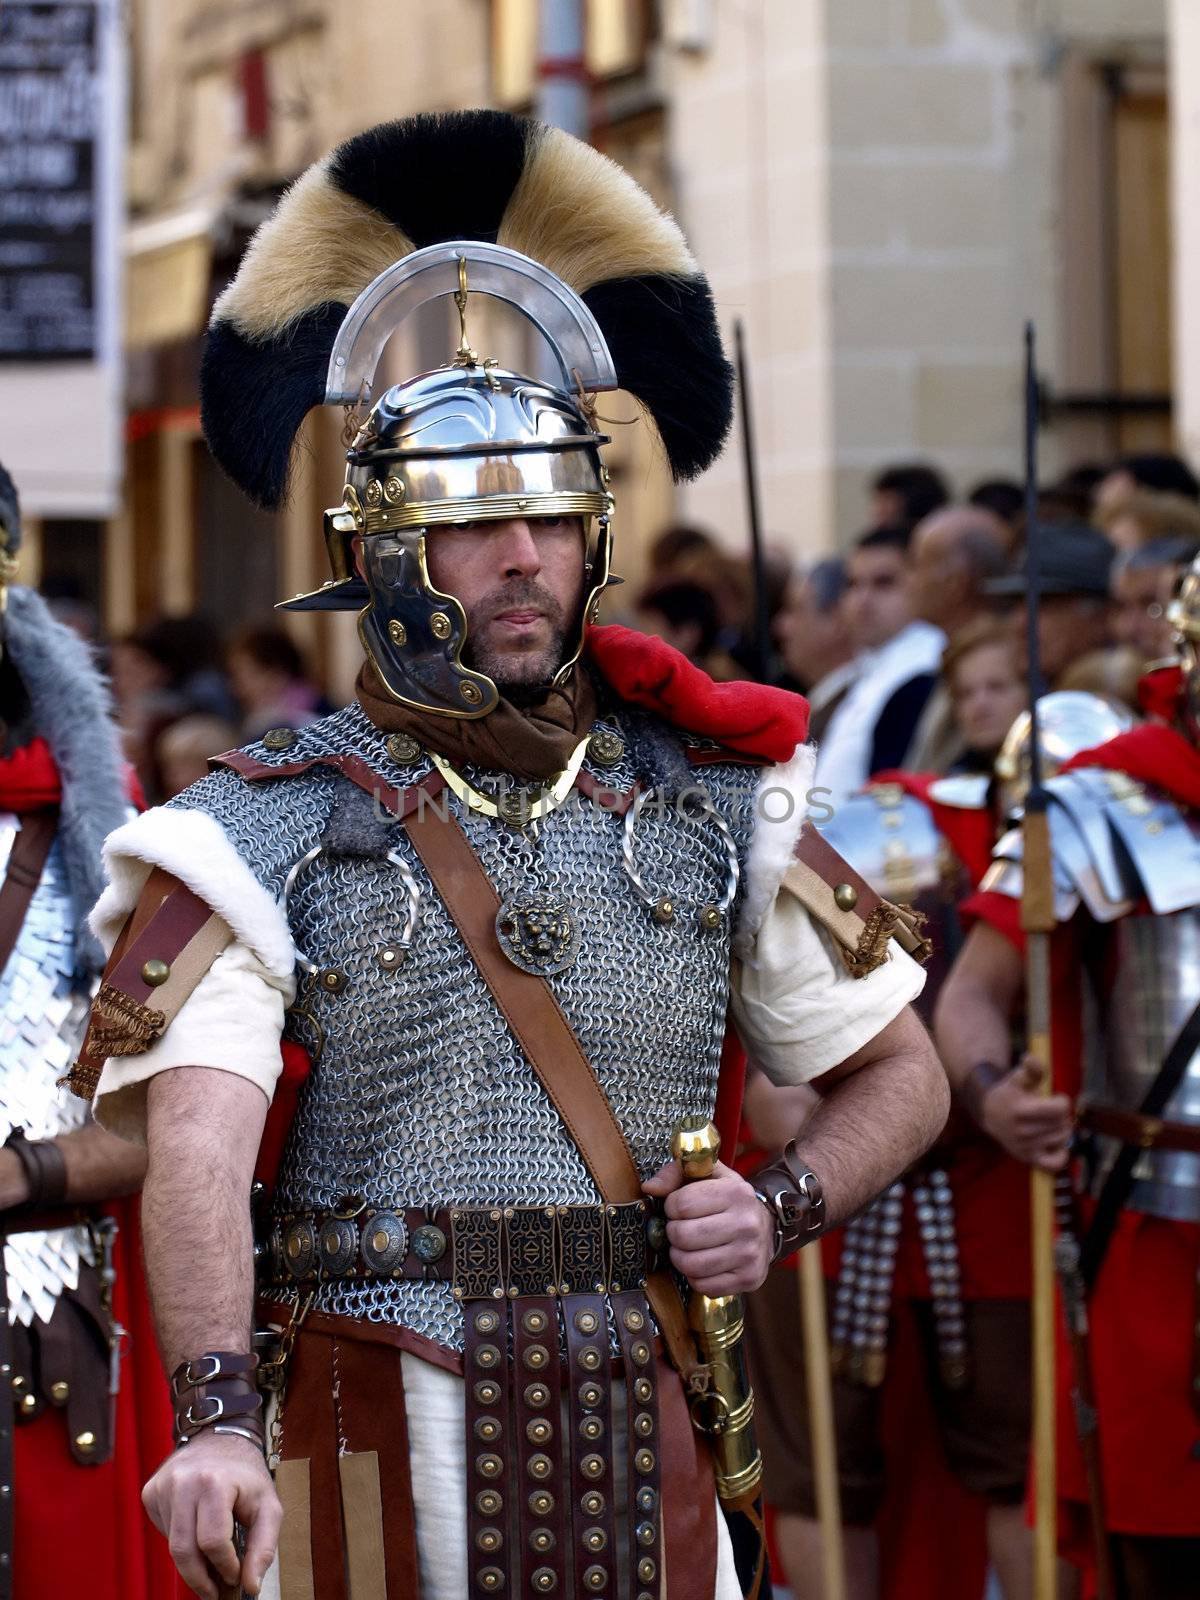 Roman Centurion by PhotoWorks